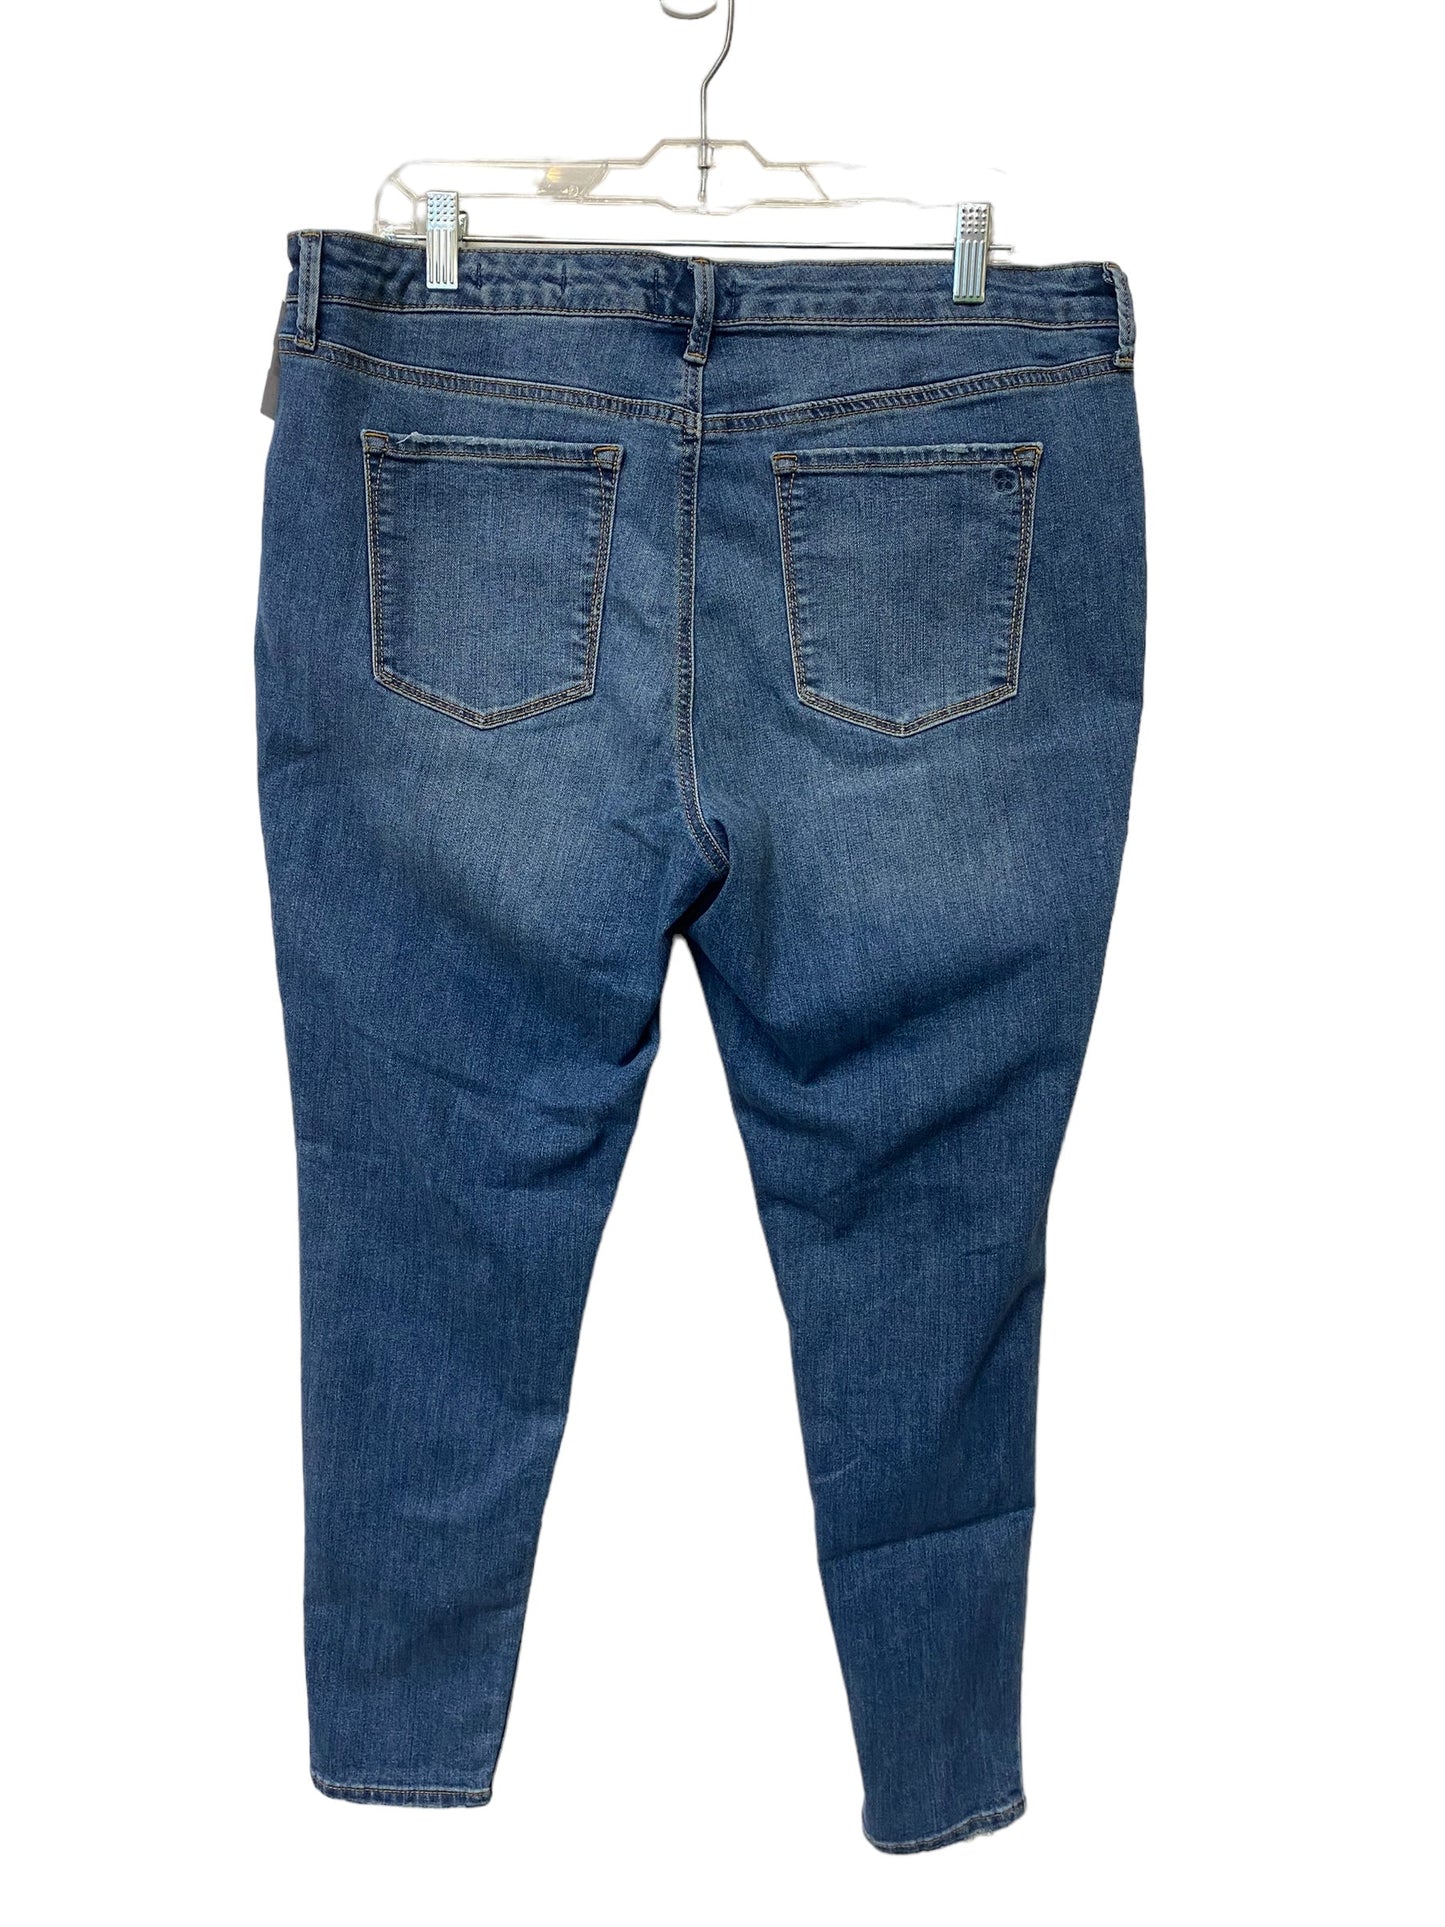 Jeans Skinny By Jessica Simpson  Size: 16